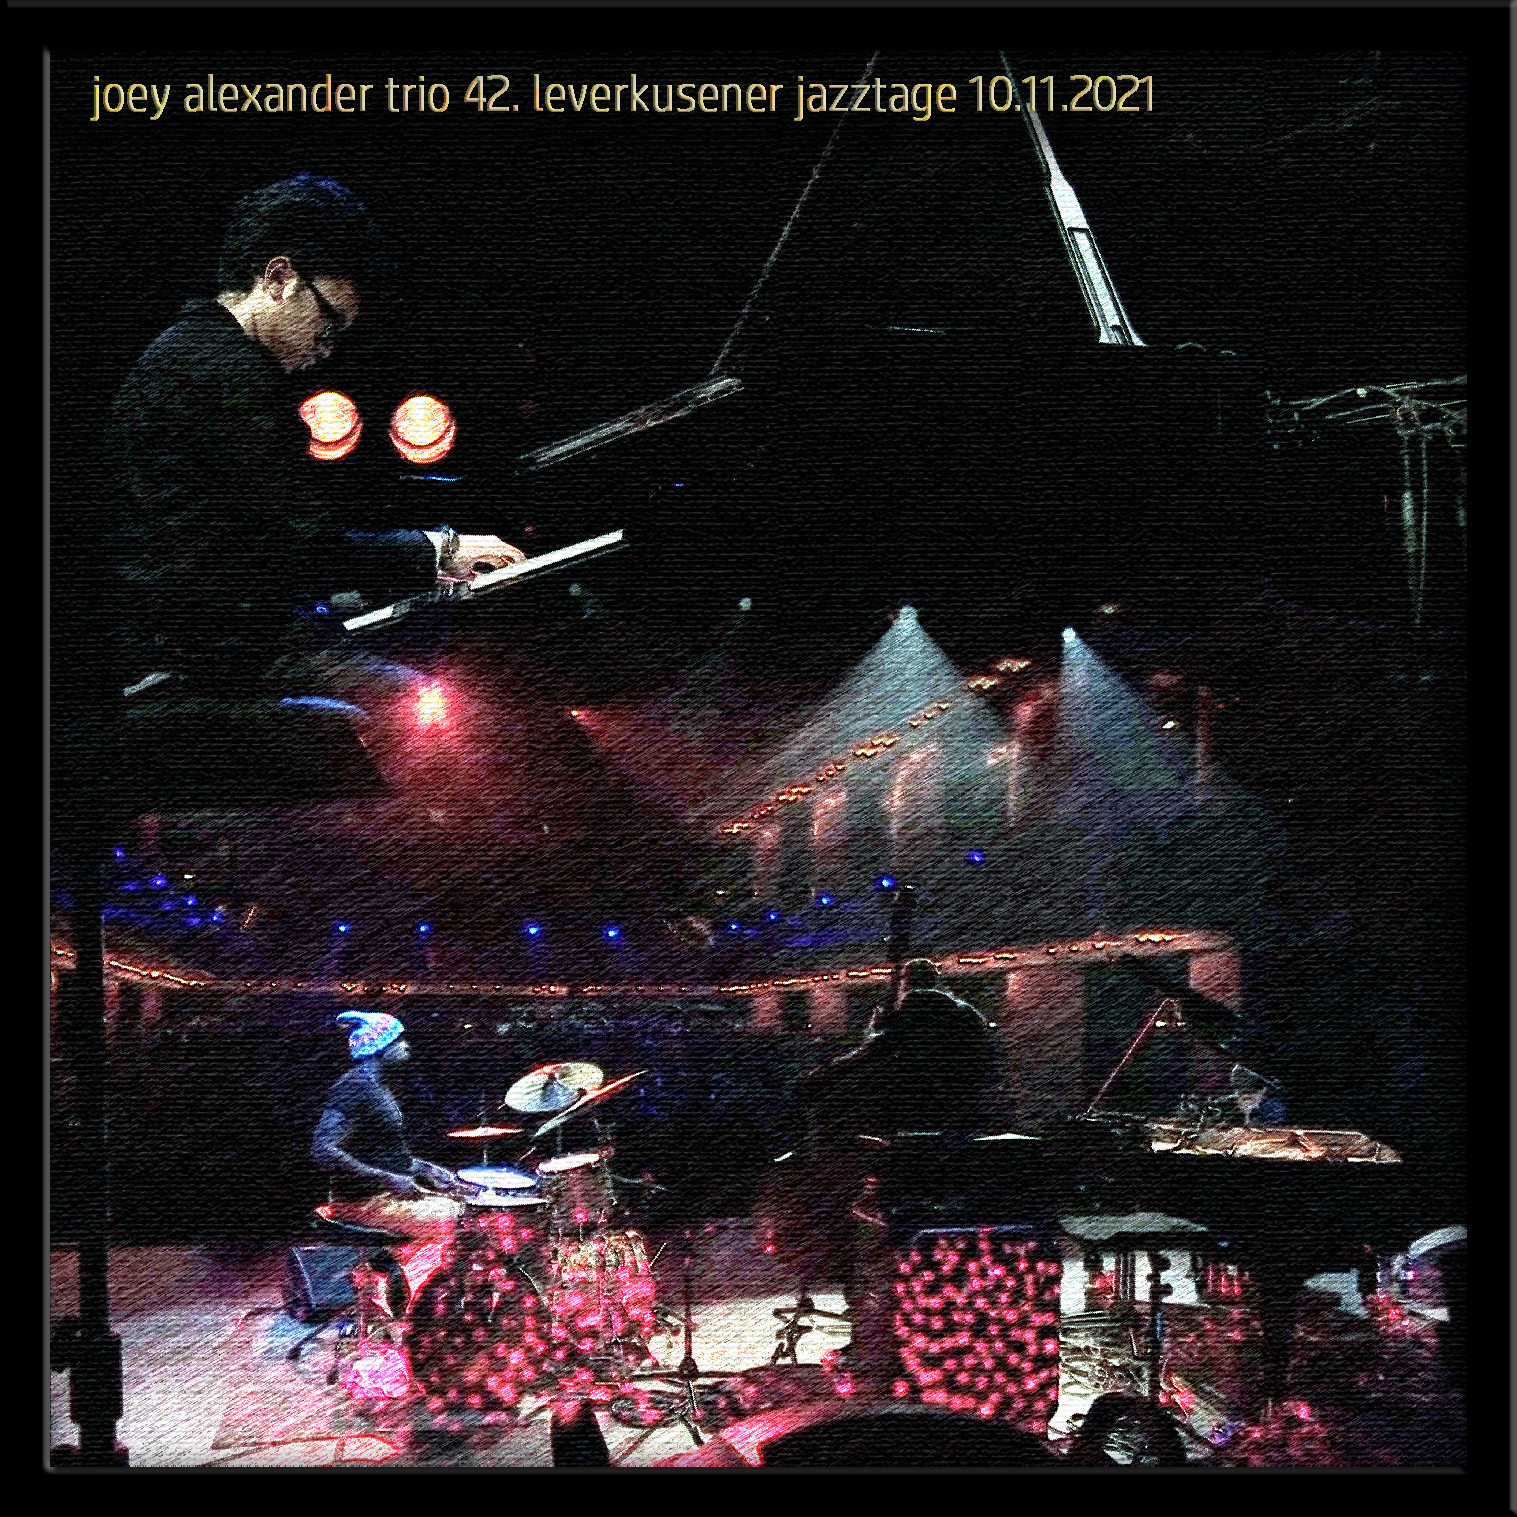 JoeyAlexanderTrio2021-11-10JazzstageLeverkusenGermany (3).jpg